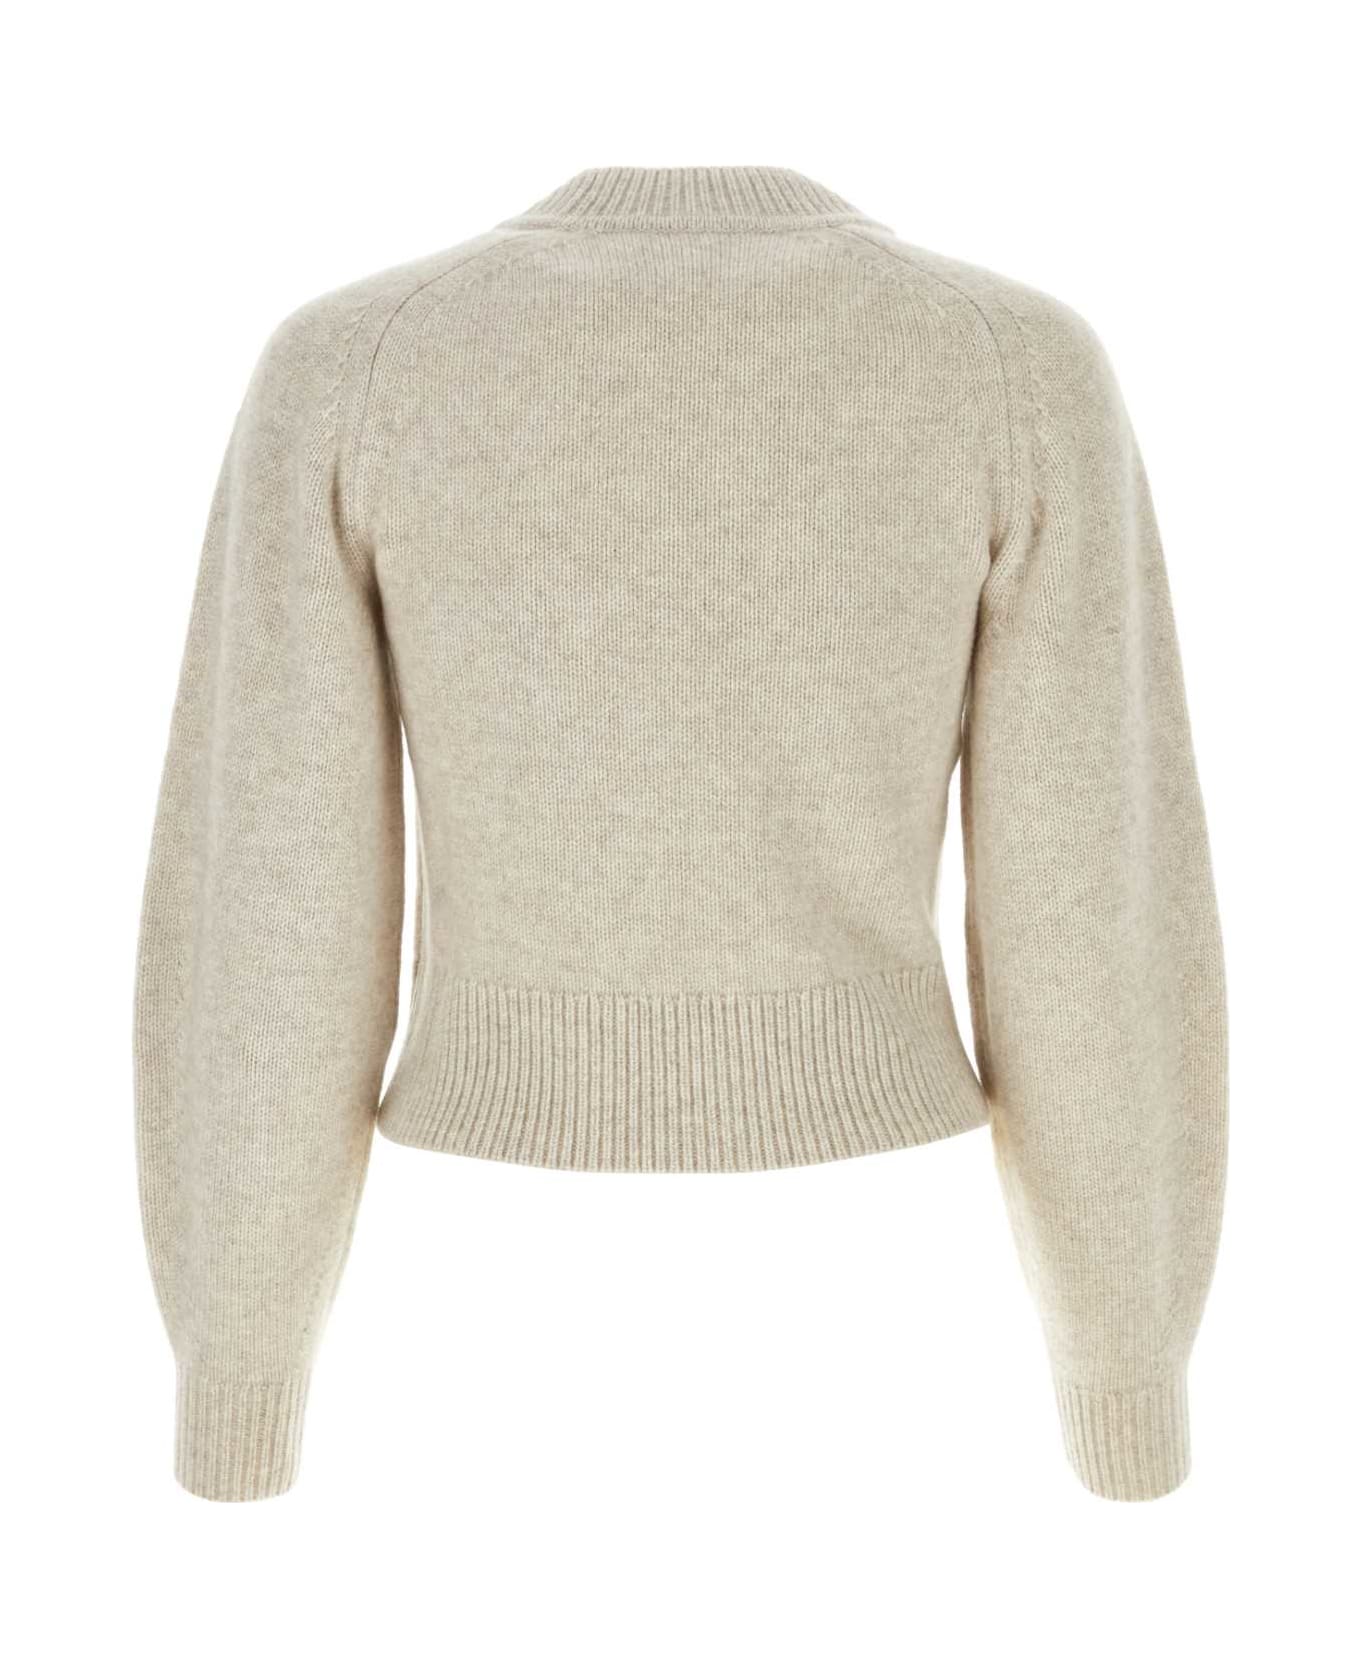 Isabel Marant Sand Cotton Blend Leandra Sweater - SAND